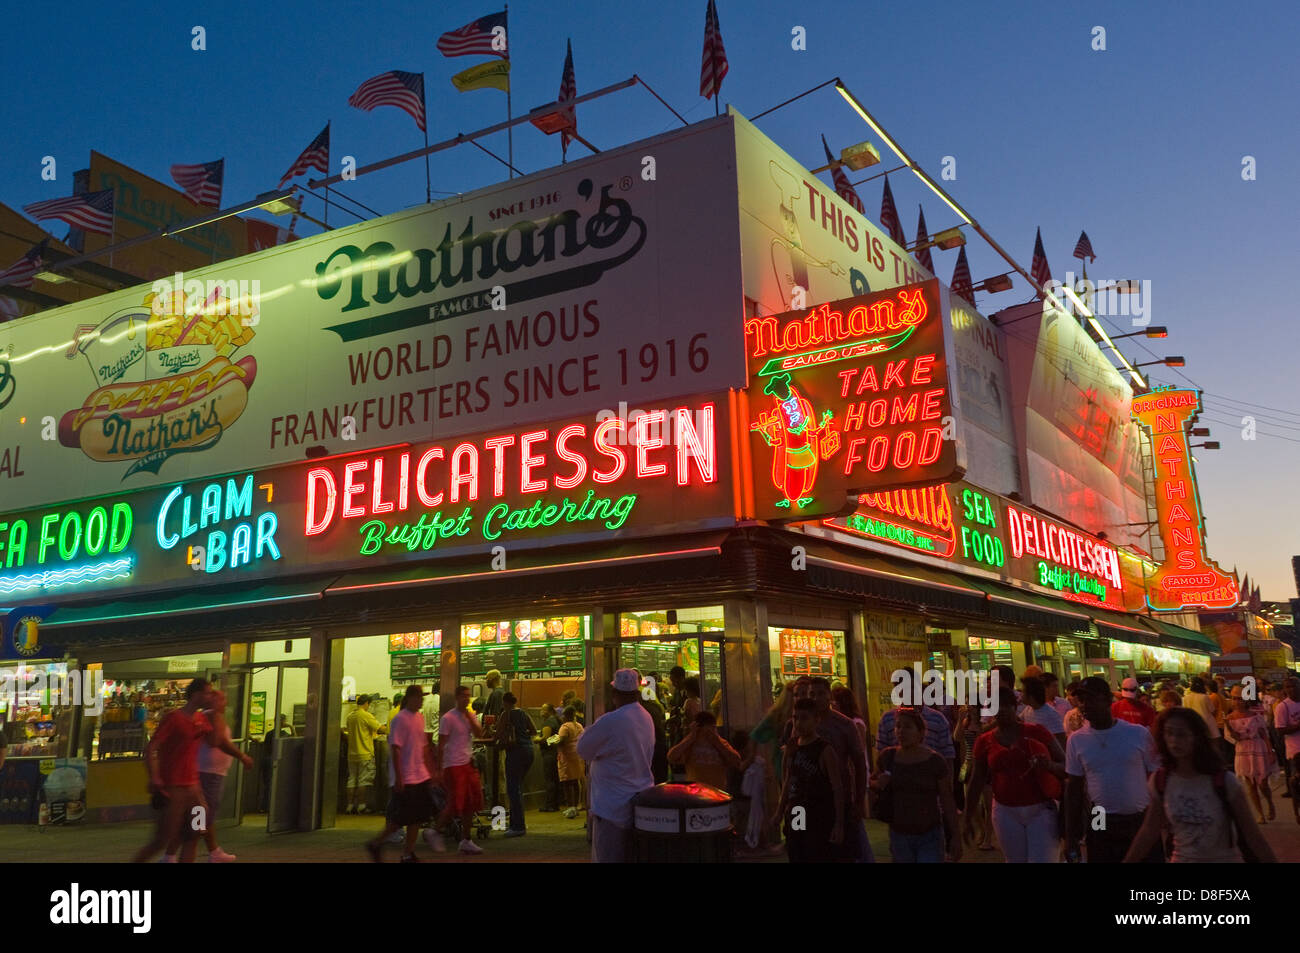 Coney Island, NY - Nathans berühmten Hot Dog Restaurant in der Abenddämmerung Stockfoto